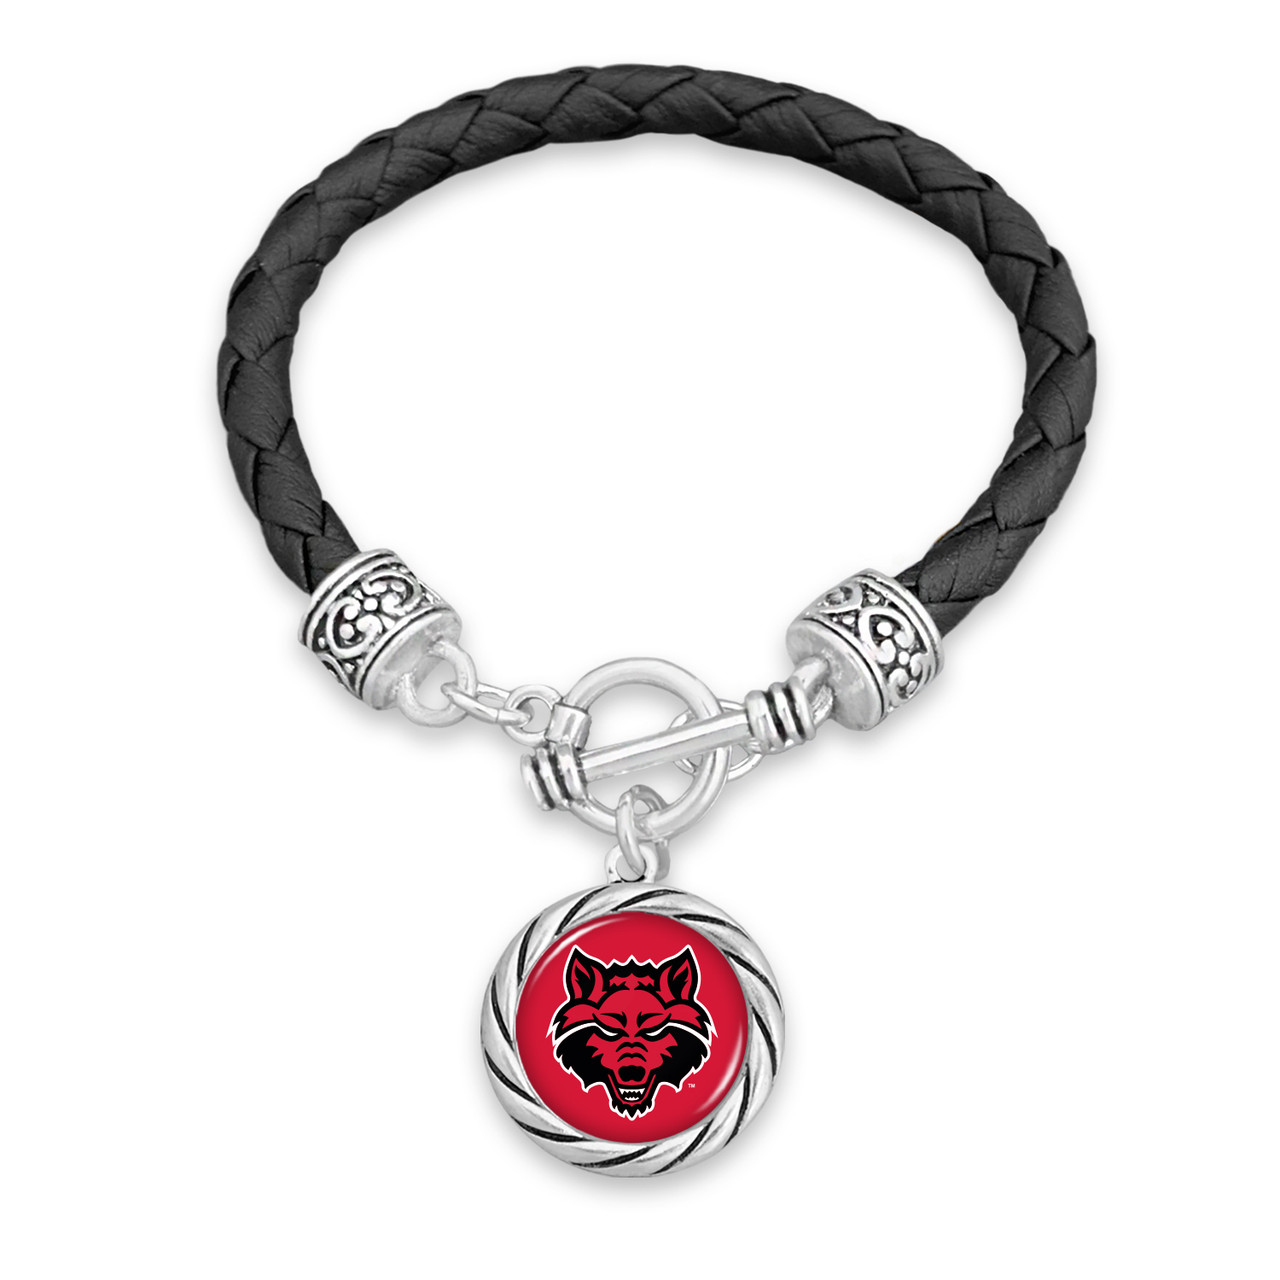 Arkansas State Red Wolves Bracelet- Black Leather Toggle